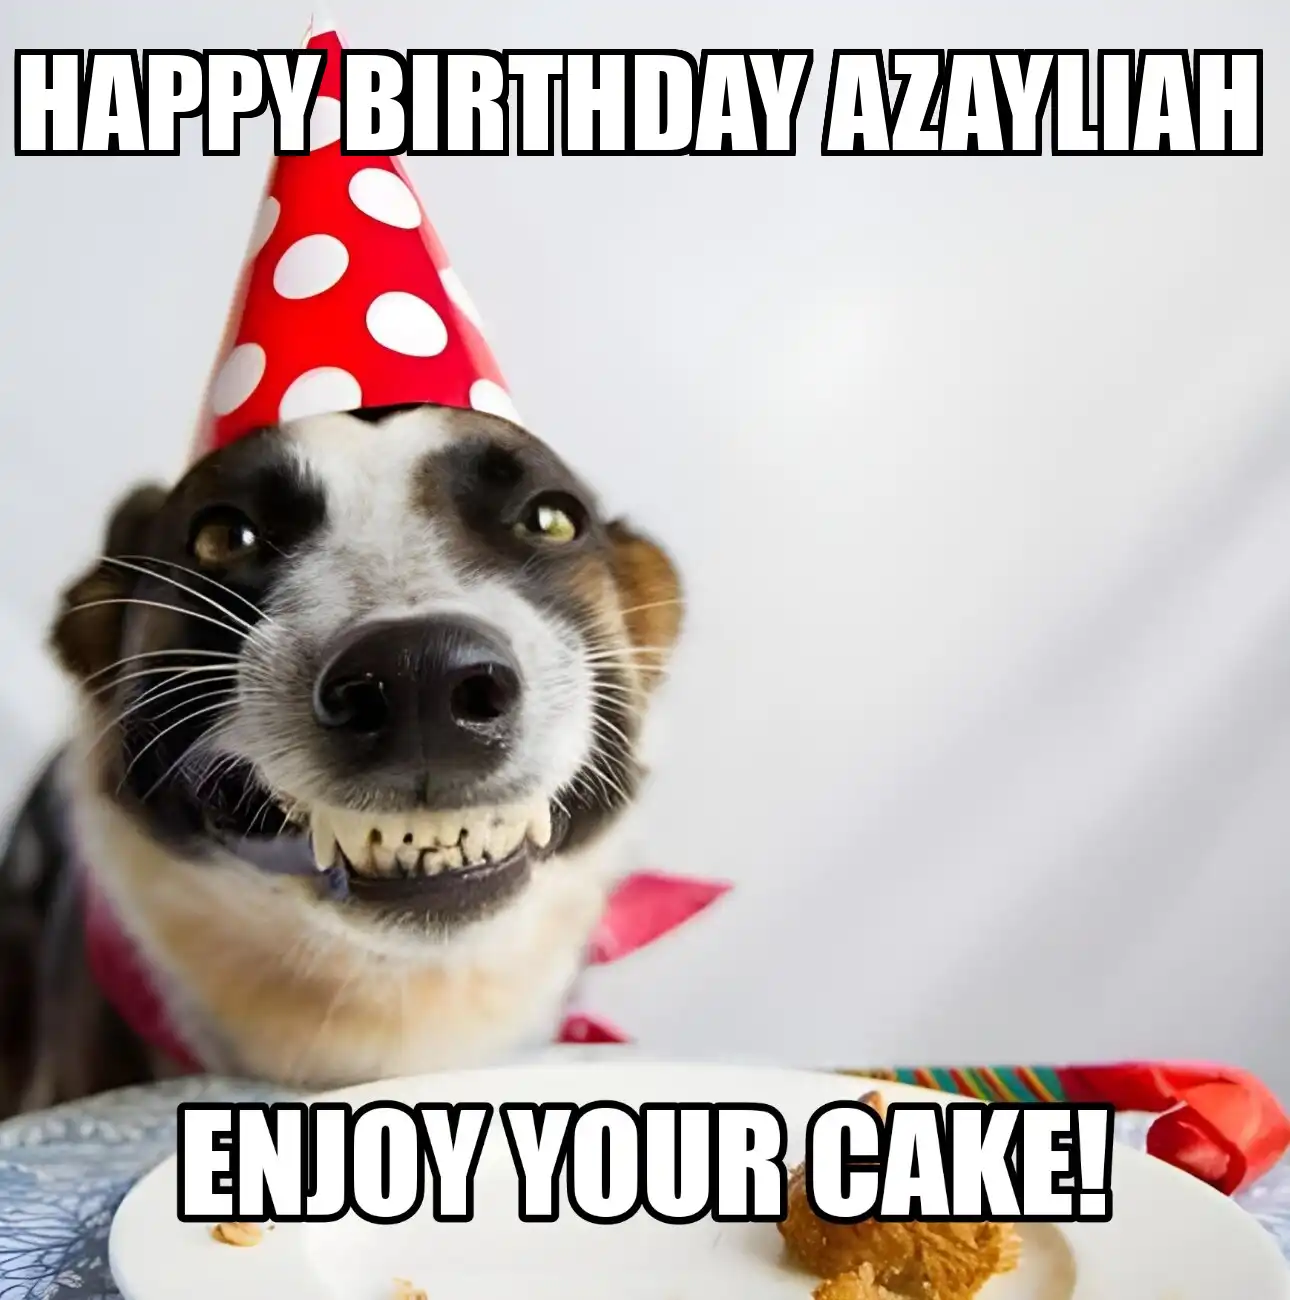 Happy Birthday Azayliah Enjoy Your Cake Dog Meme